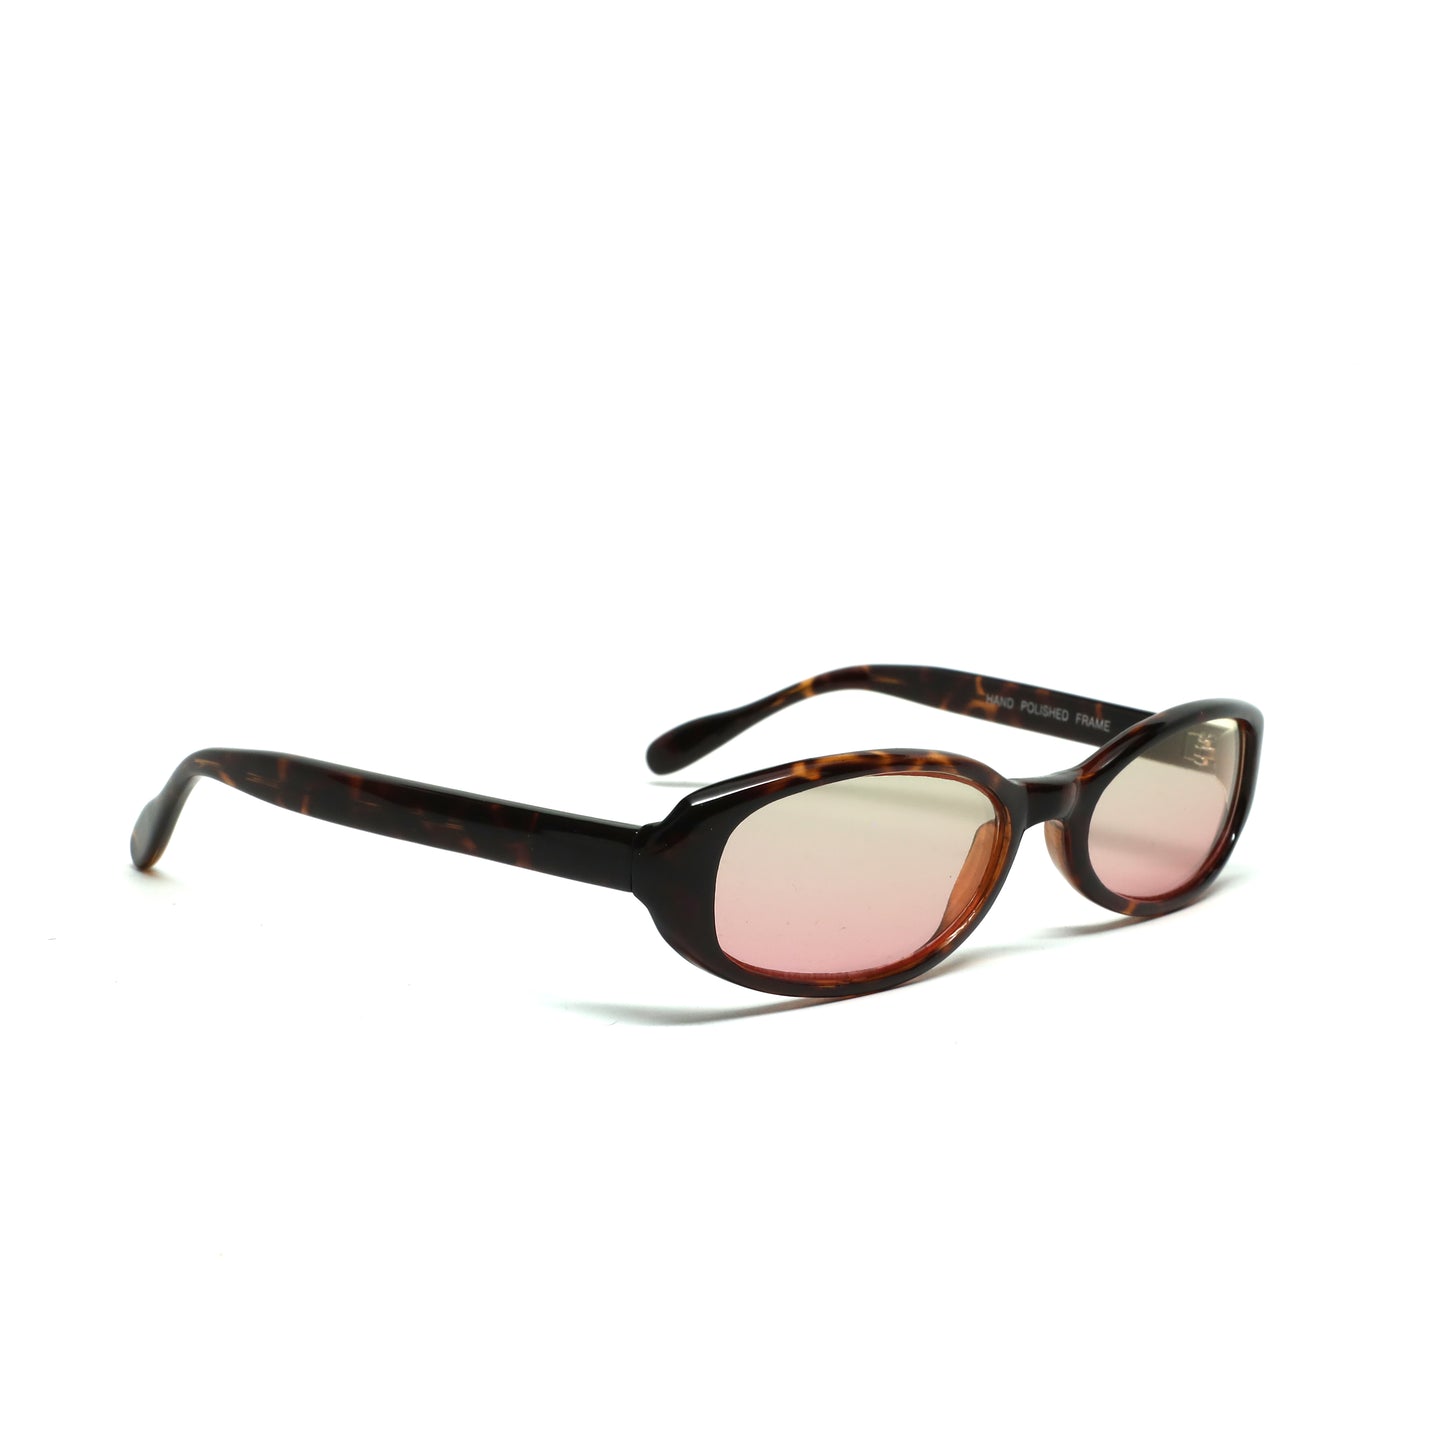 //RARE// Vintage 90s Deadstock Jane Original Oval Sunglasses - Gradient Pink